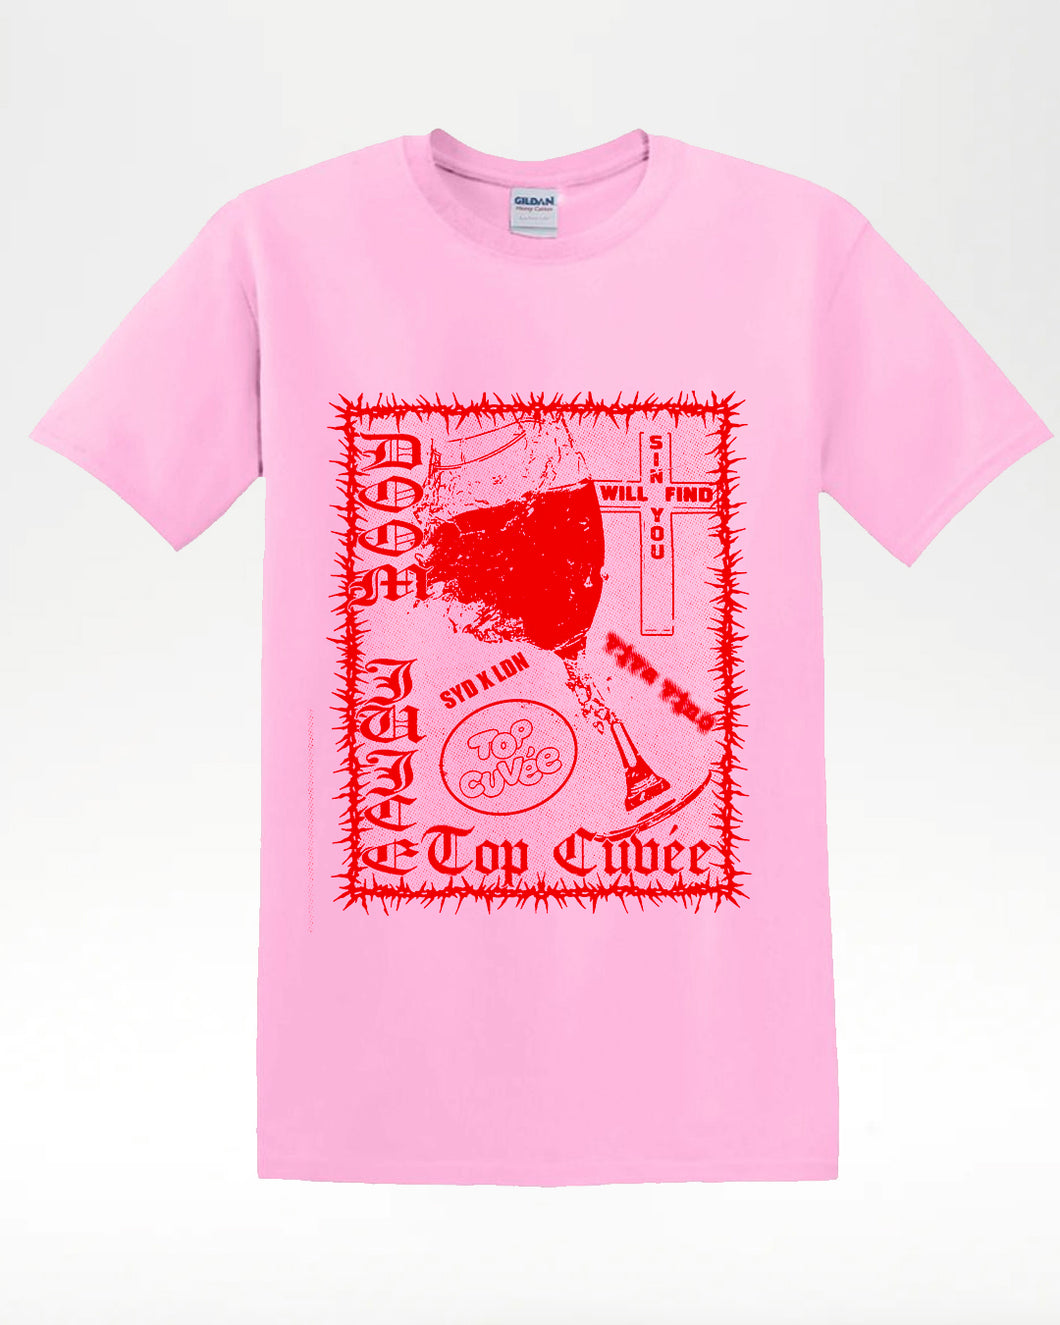 Top Cuvée x Doom Juice T-Shirt